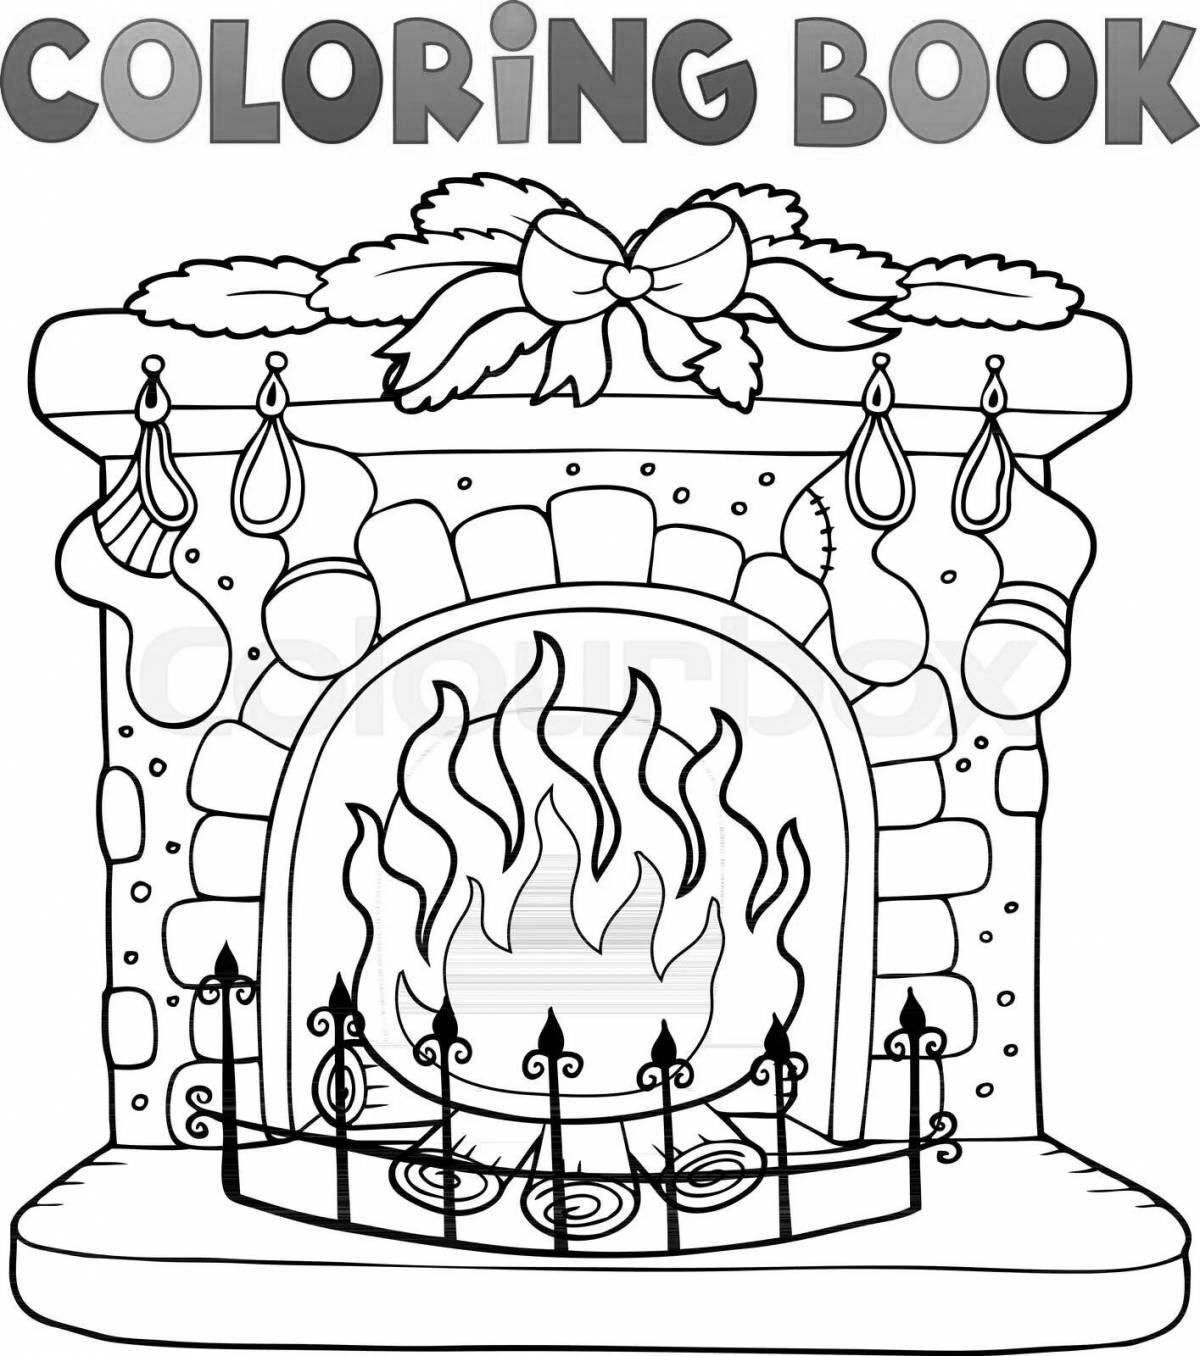 Joyful fireplace coloring book for kids